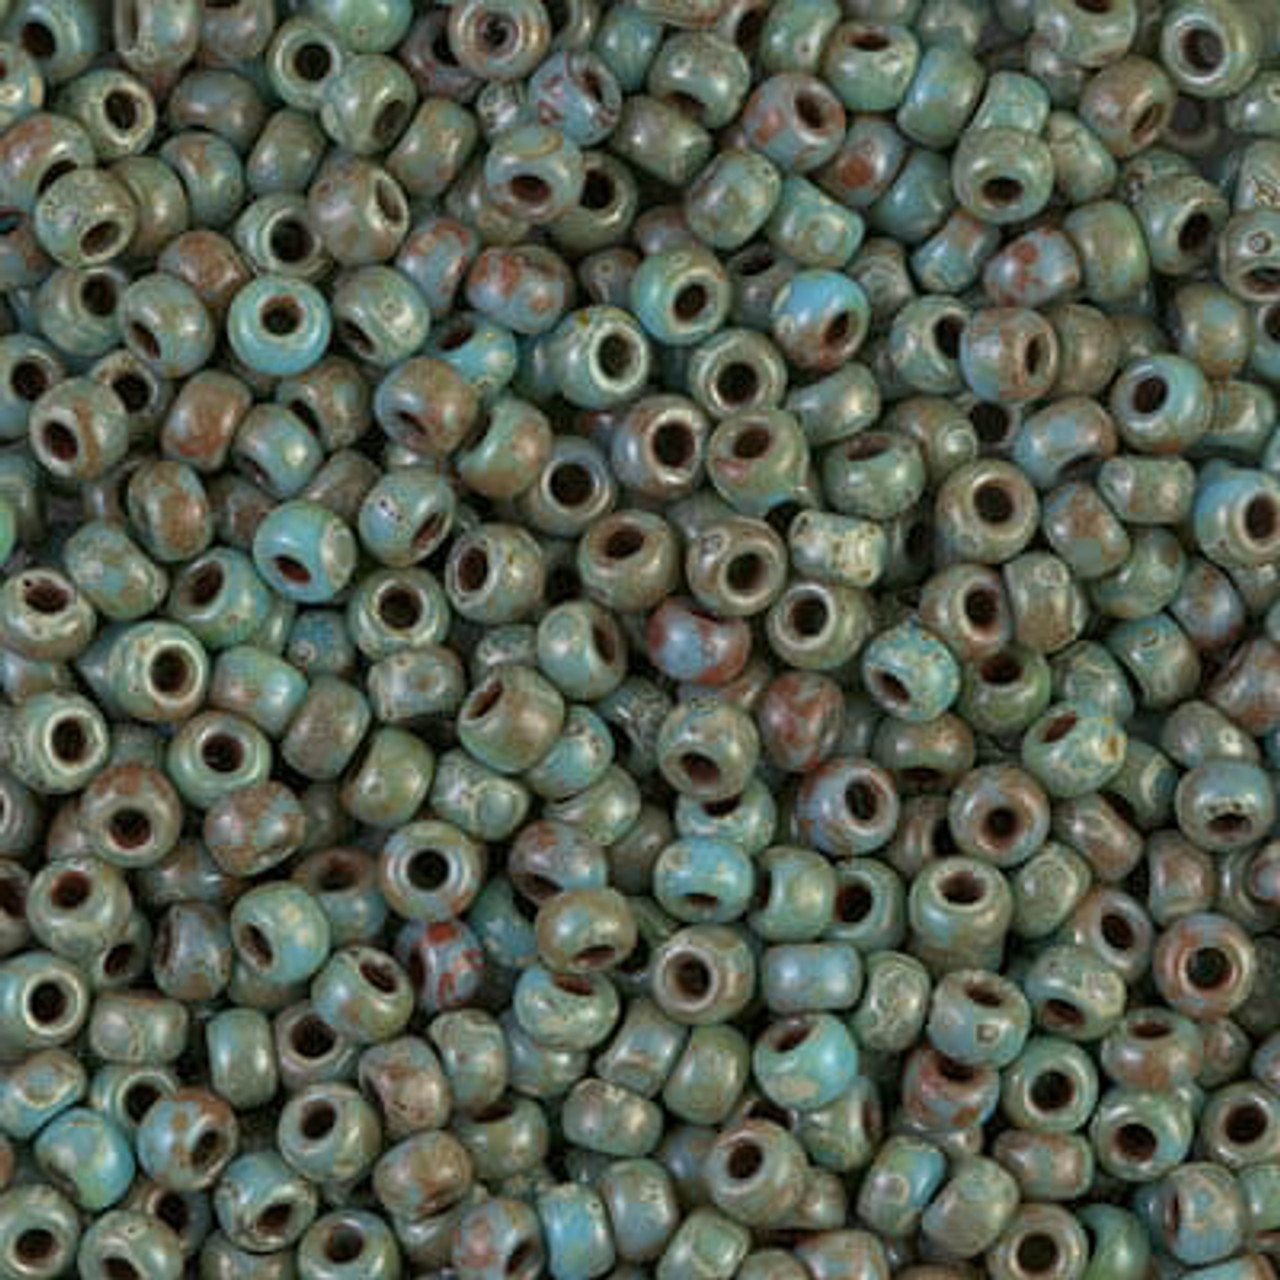 20g Blue Turquoise Picasso Miyuki Seed Beads - Miyuki 4514, Women's, Size: 8/0 (Sku A234)